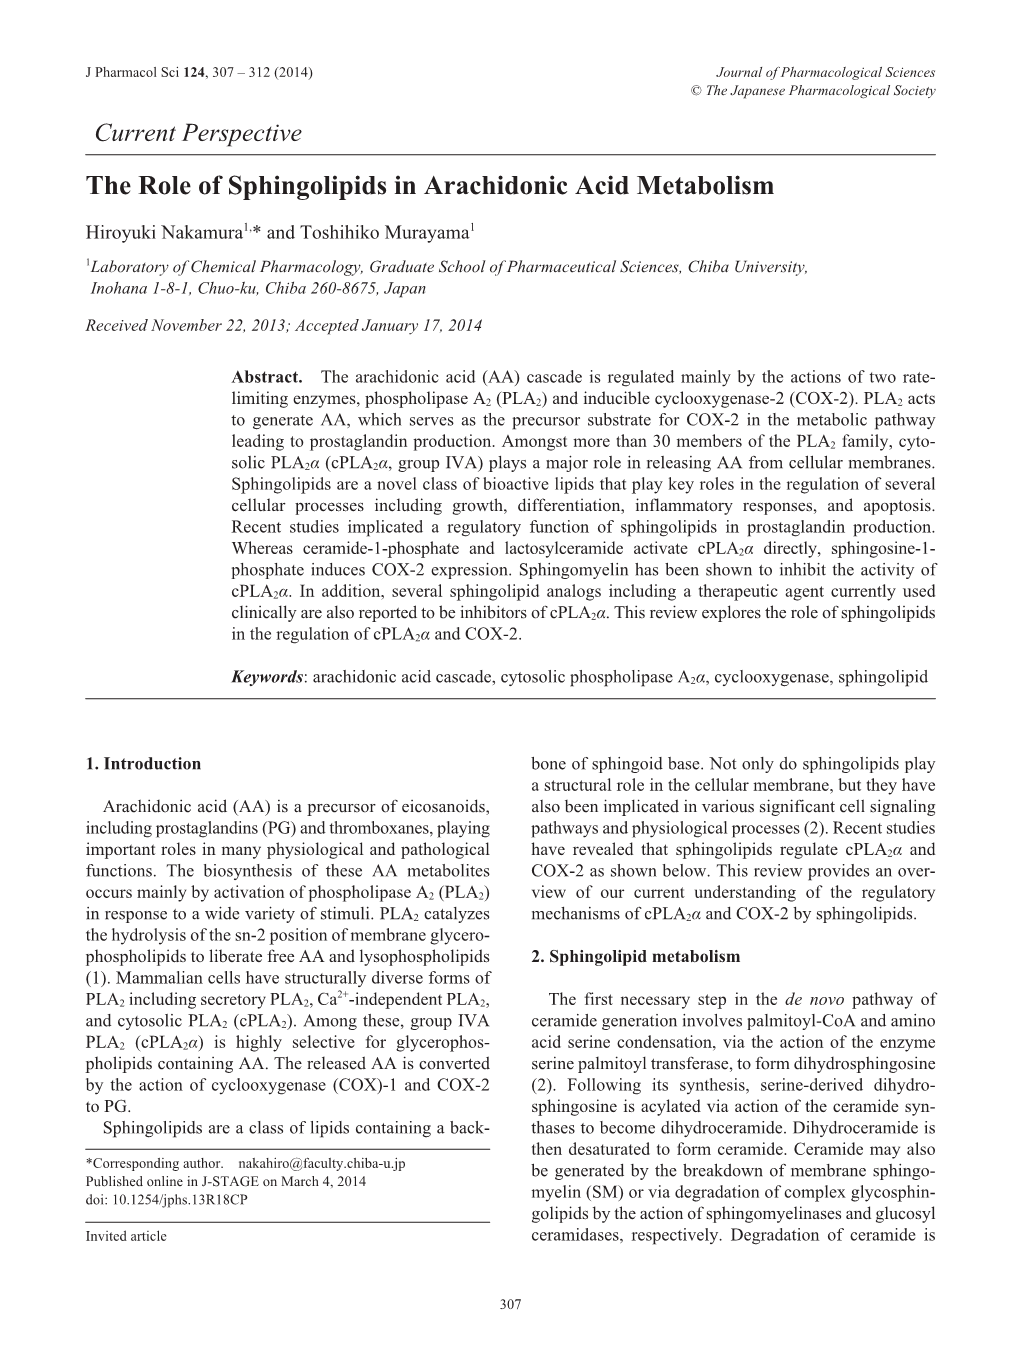 The Role of Sphingolipids in Arachidonic Acid Metabolism